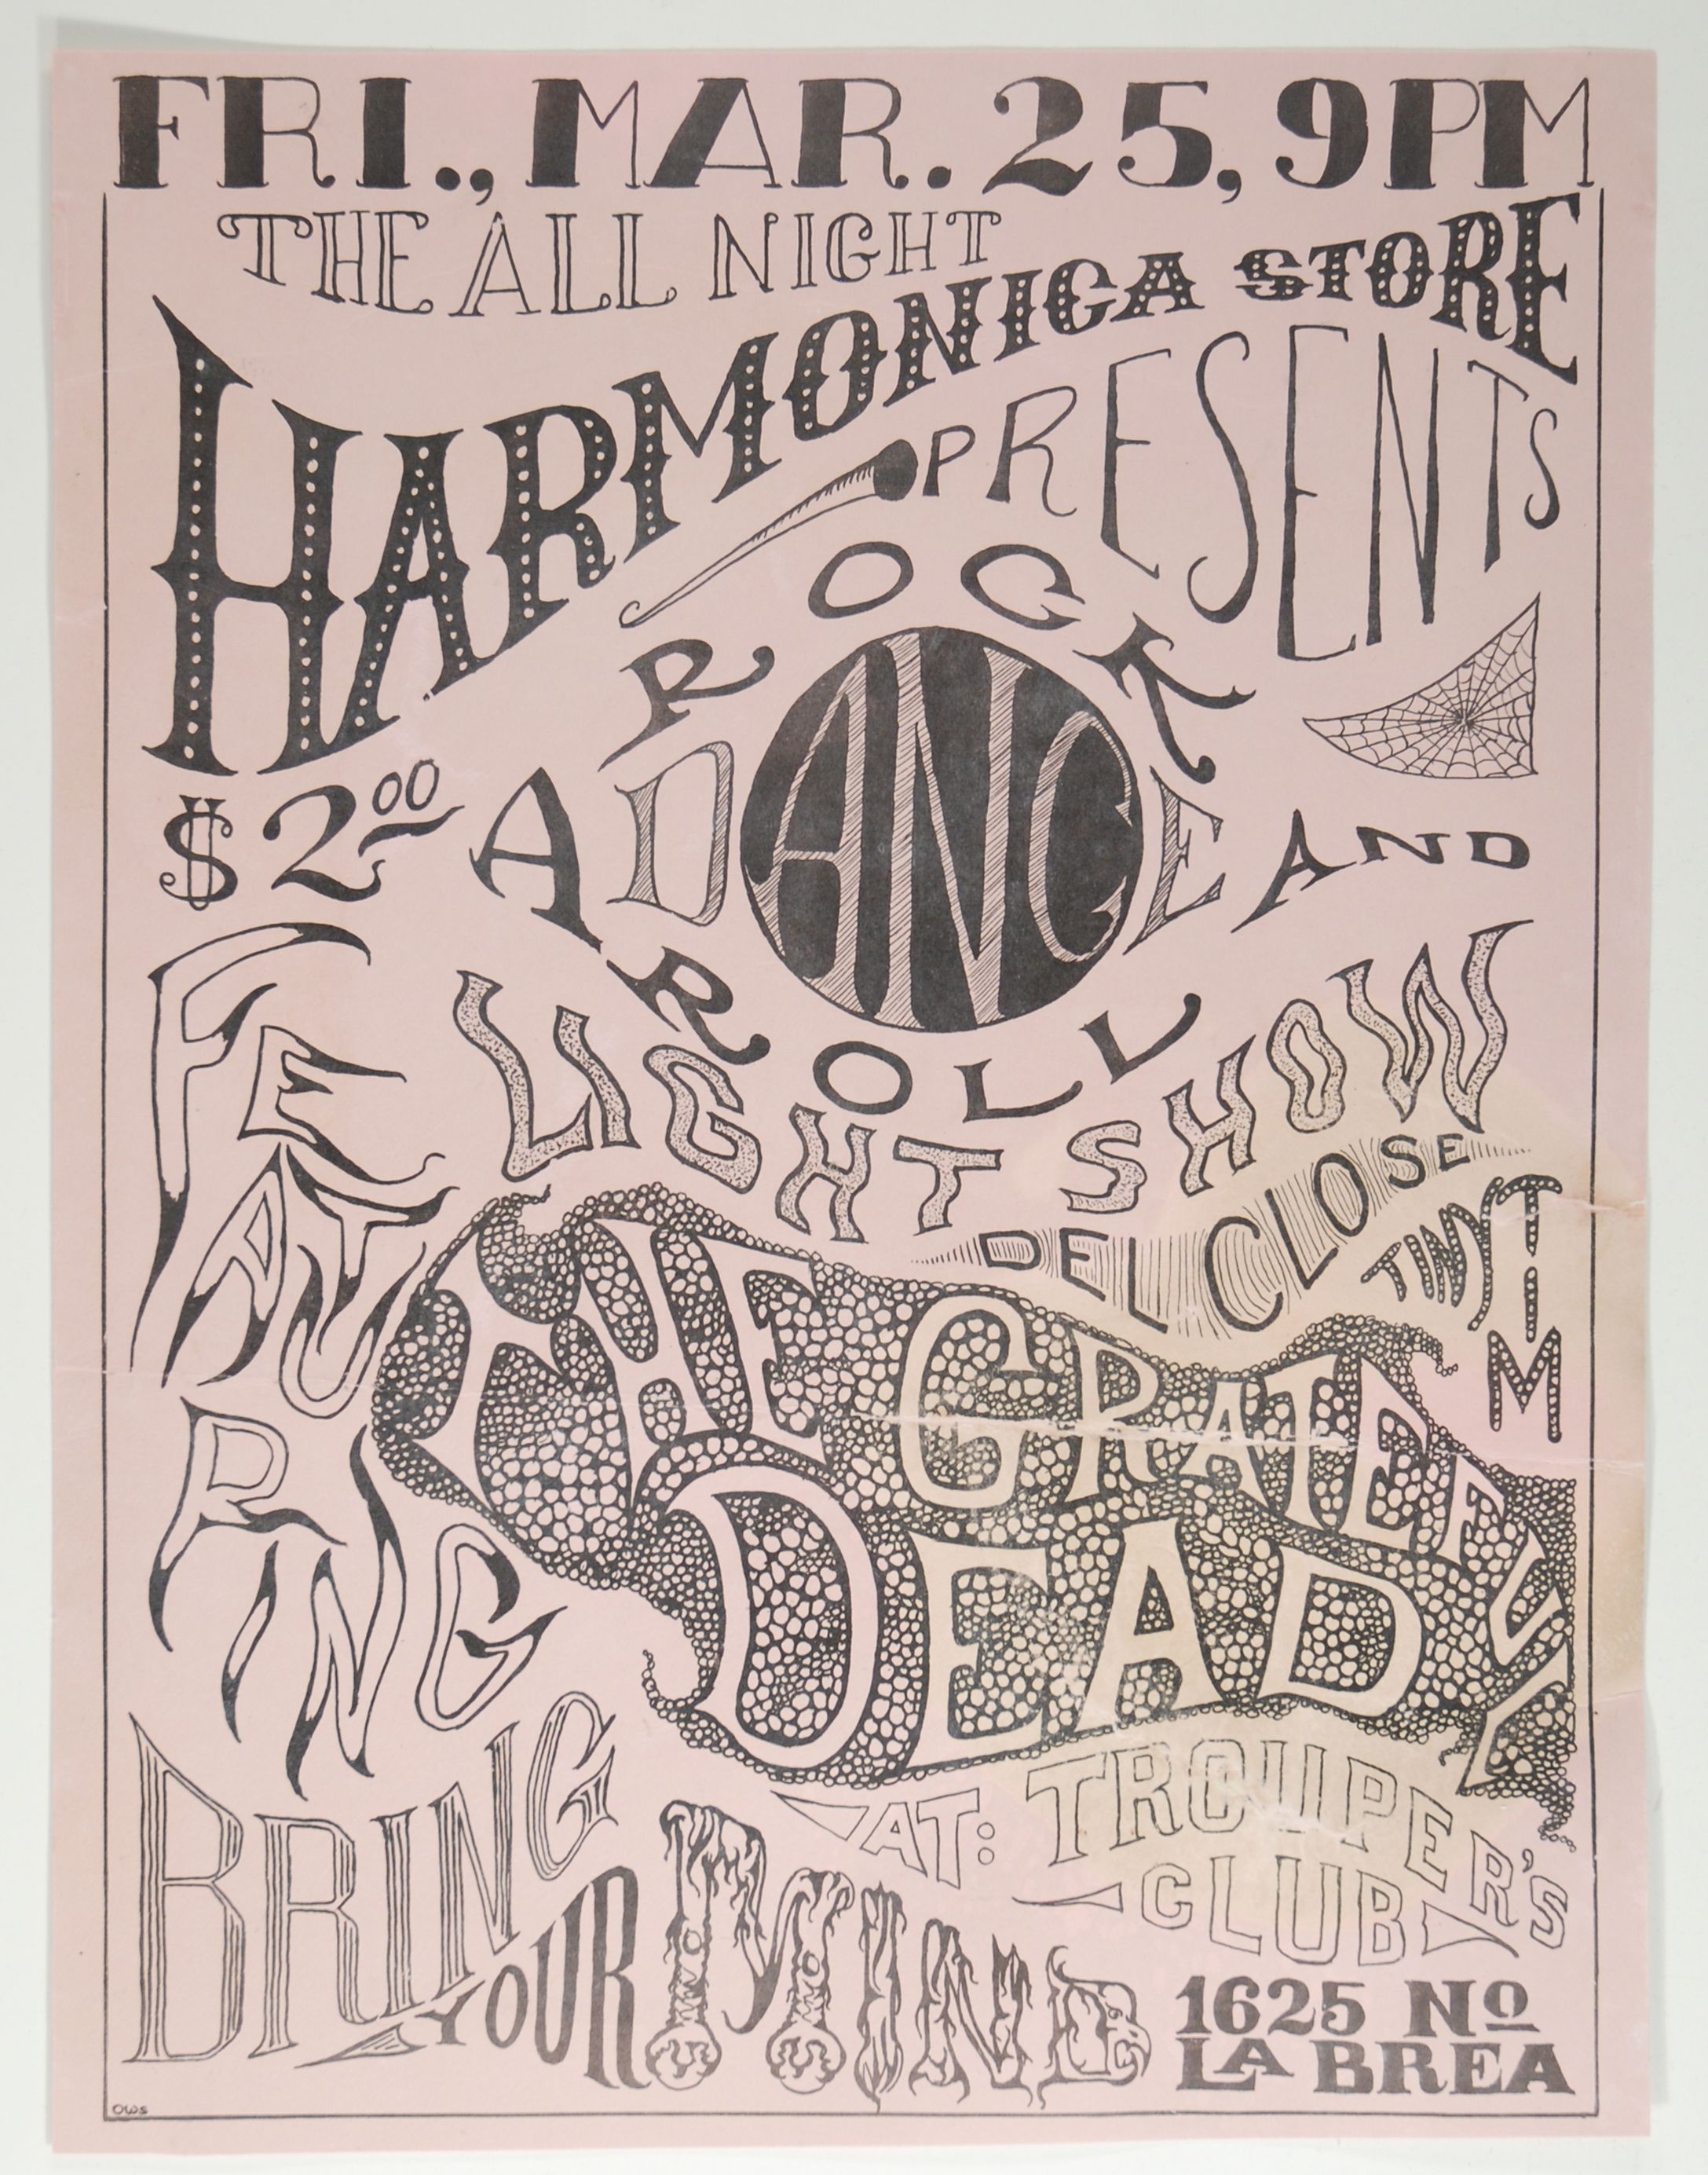 Grateful Dead Troupers Club 1966 Concert Poster